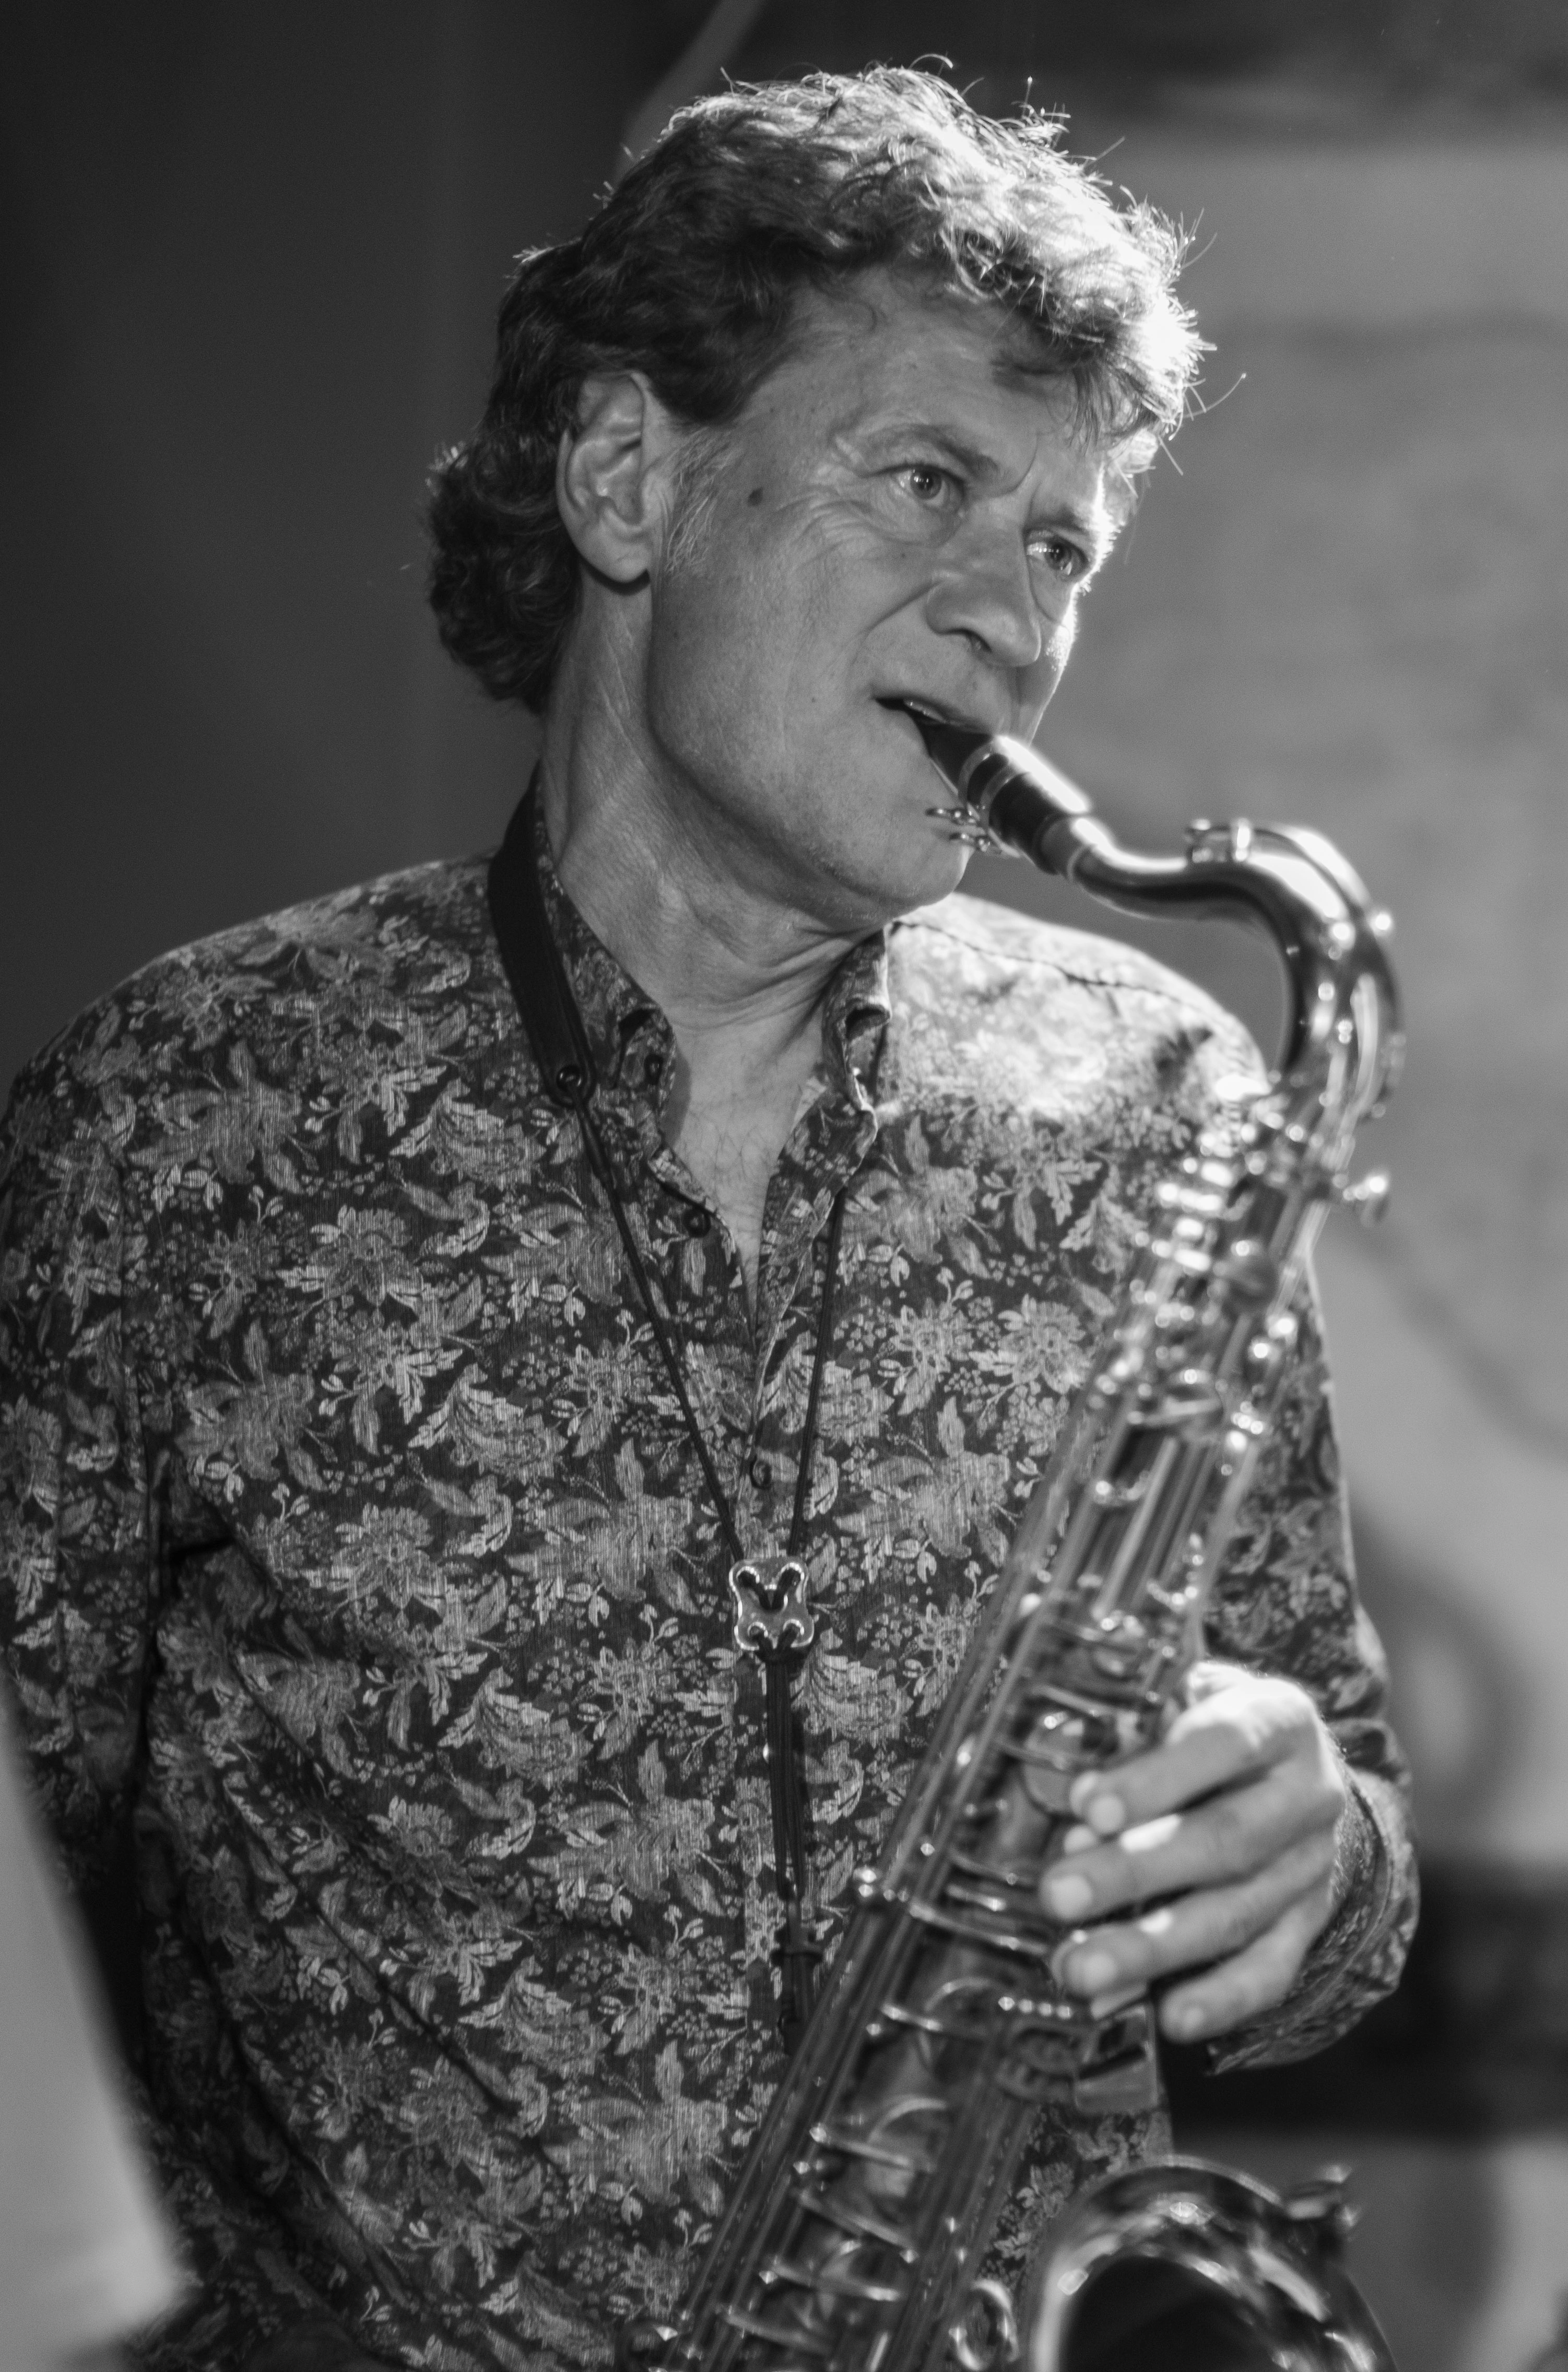 Andreas Buchmann spielt Saxophone.